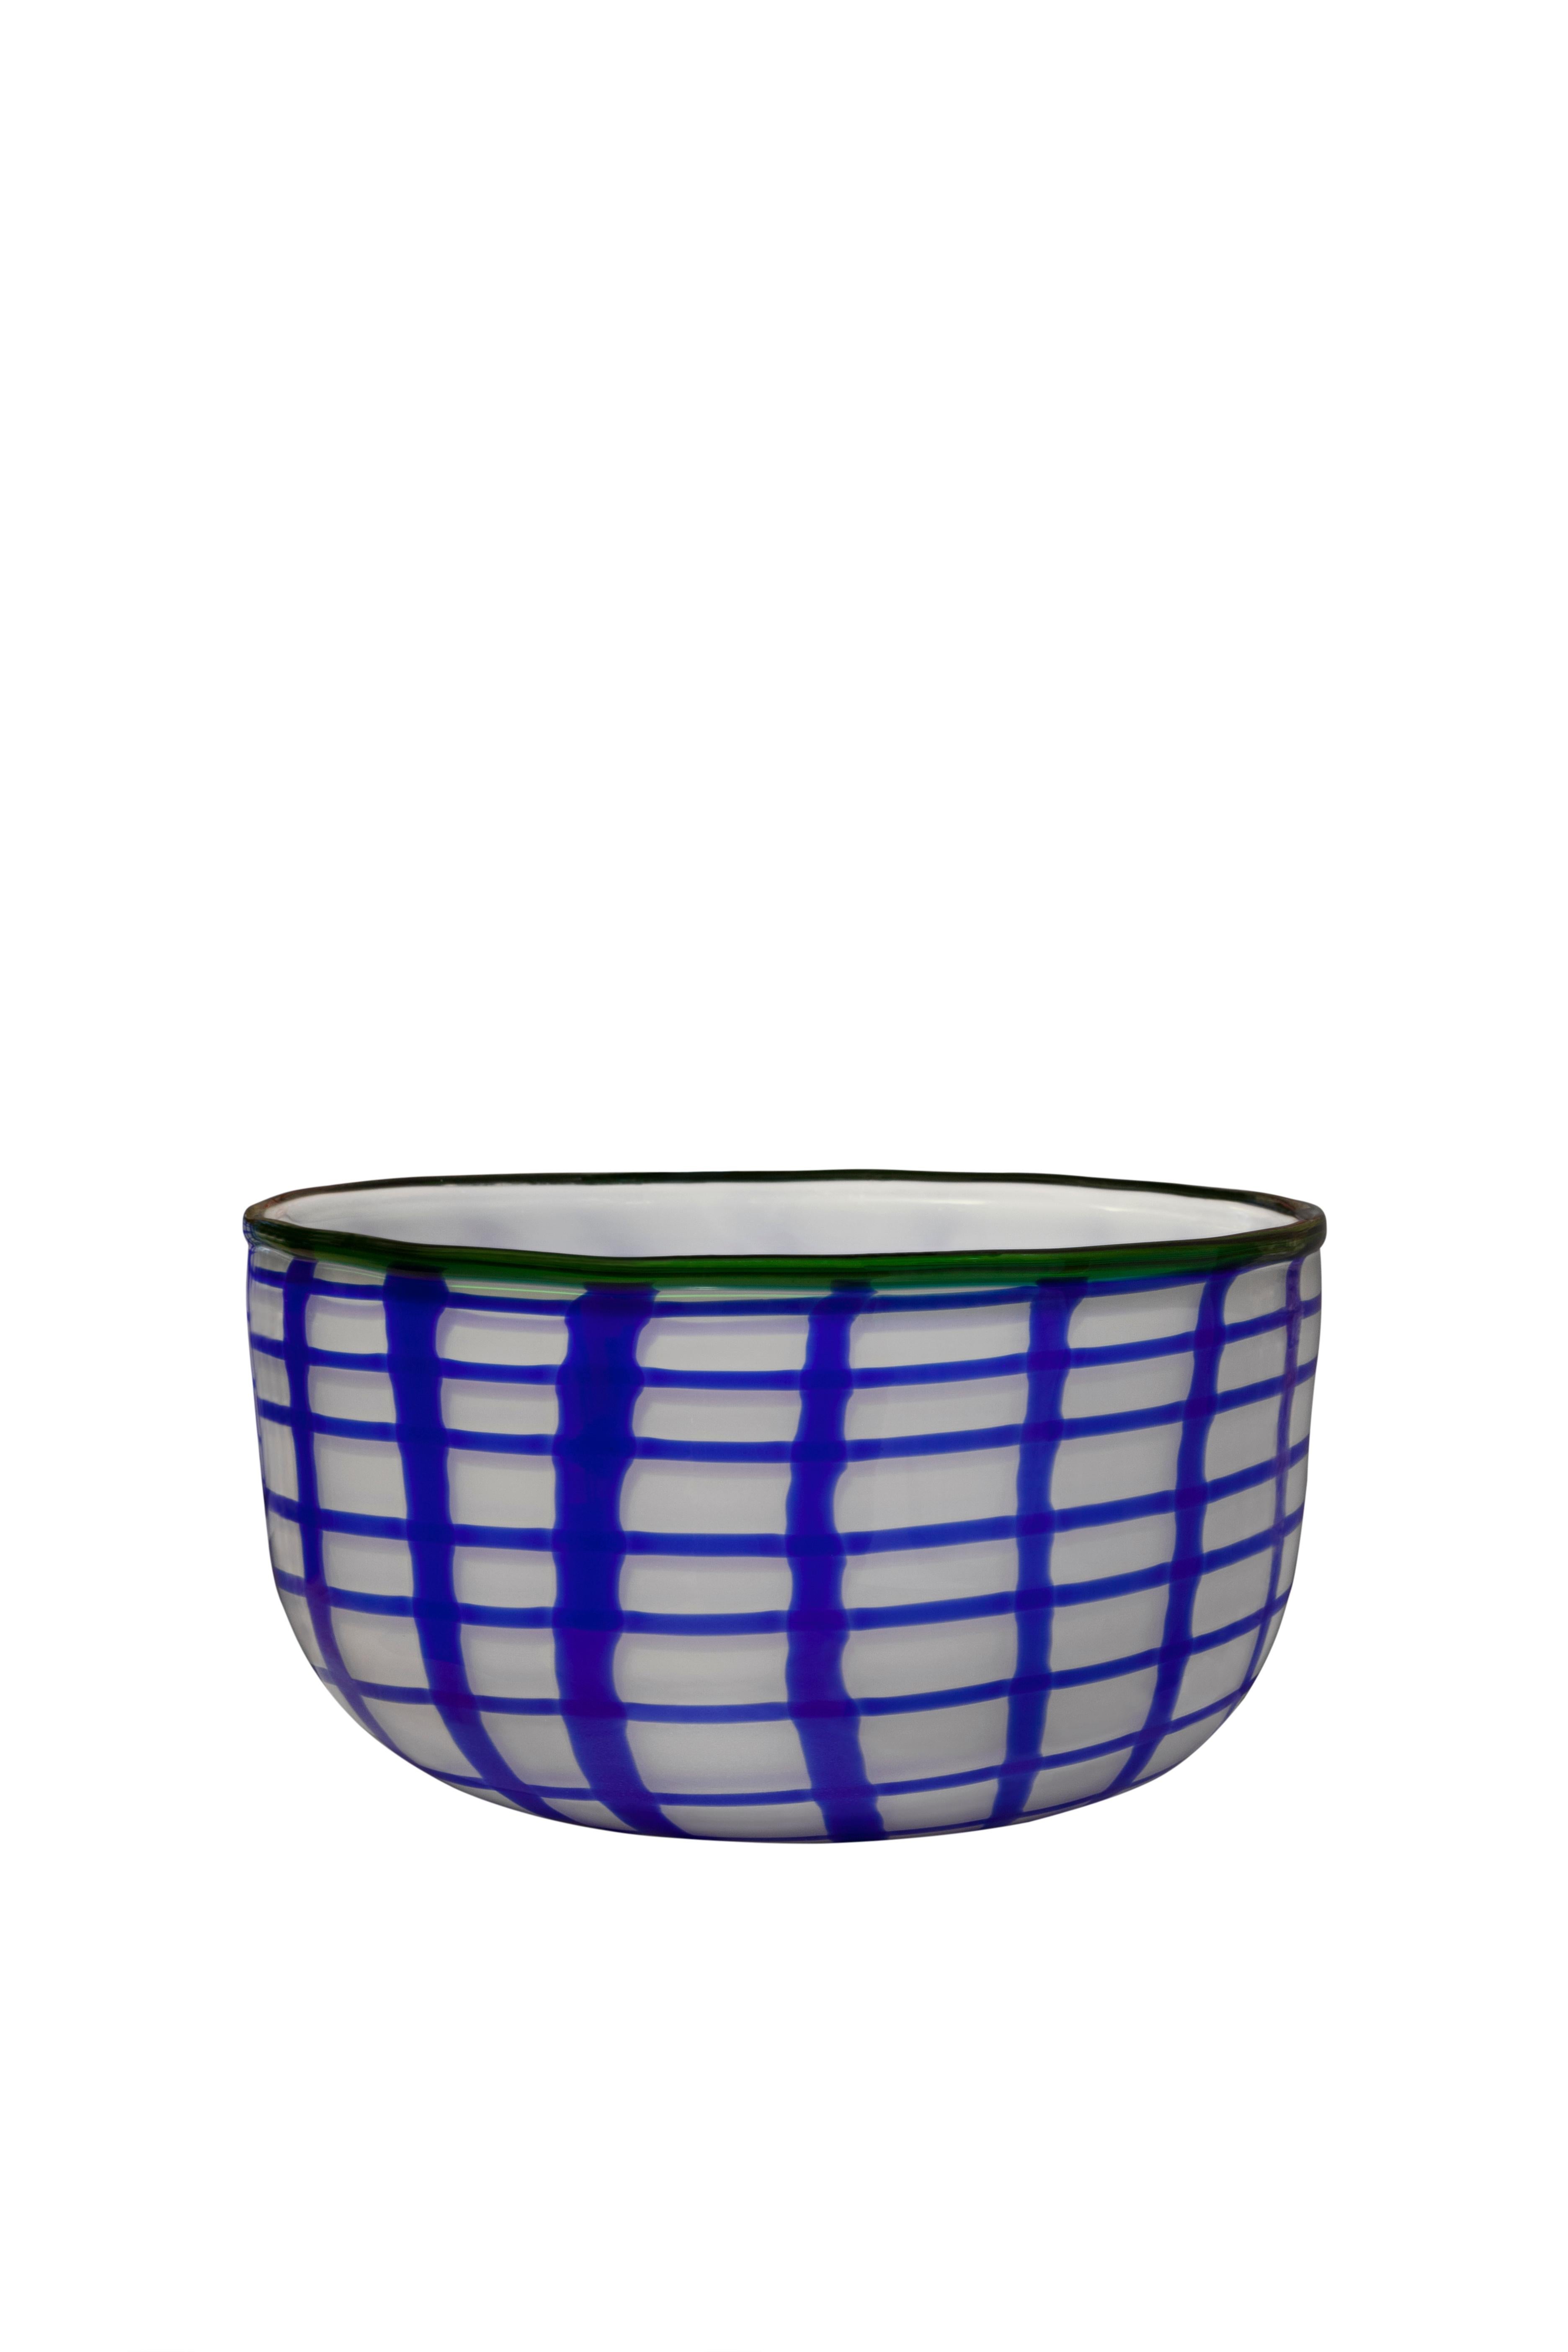 Italian Edie Green Bowl by Purho For Sale